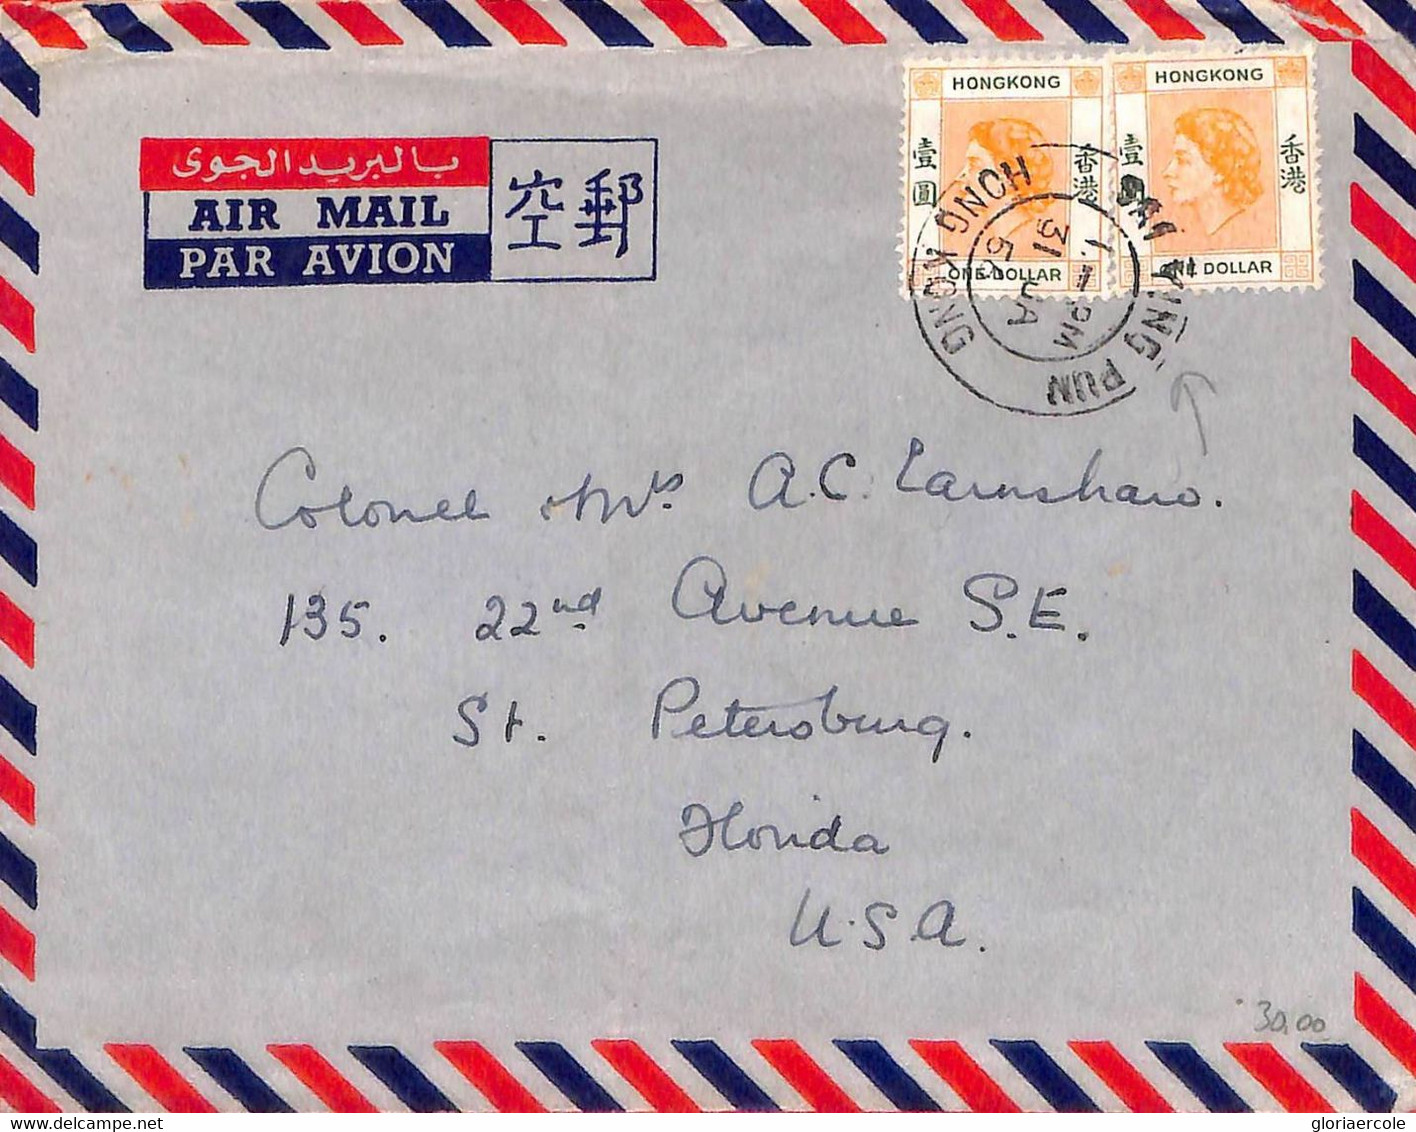 Aa6814 - HONG KONG - POSTAL HISTORY -  COVER From SAI YUNG PUN To The USA  1956 - Briefe U. Dokumente